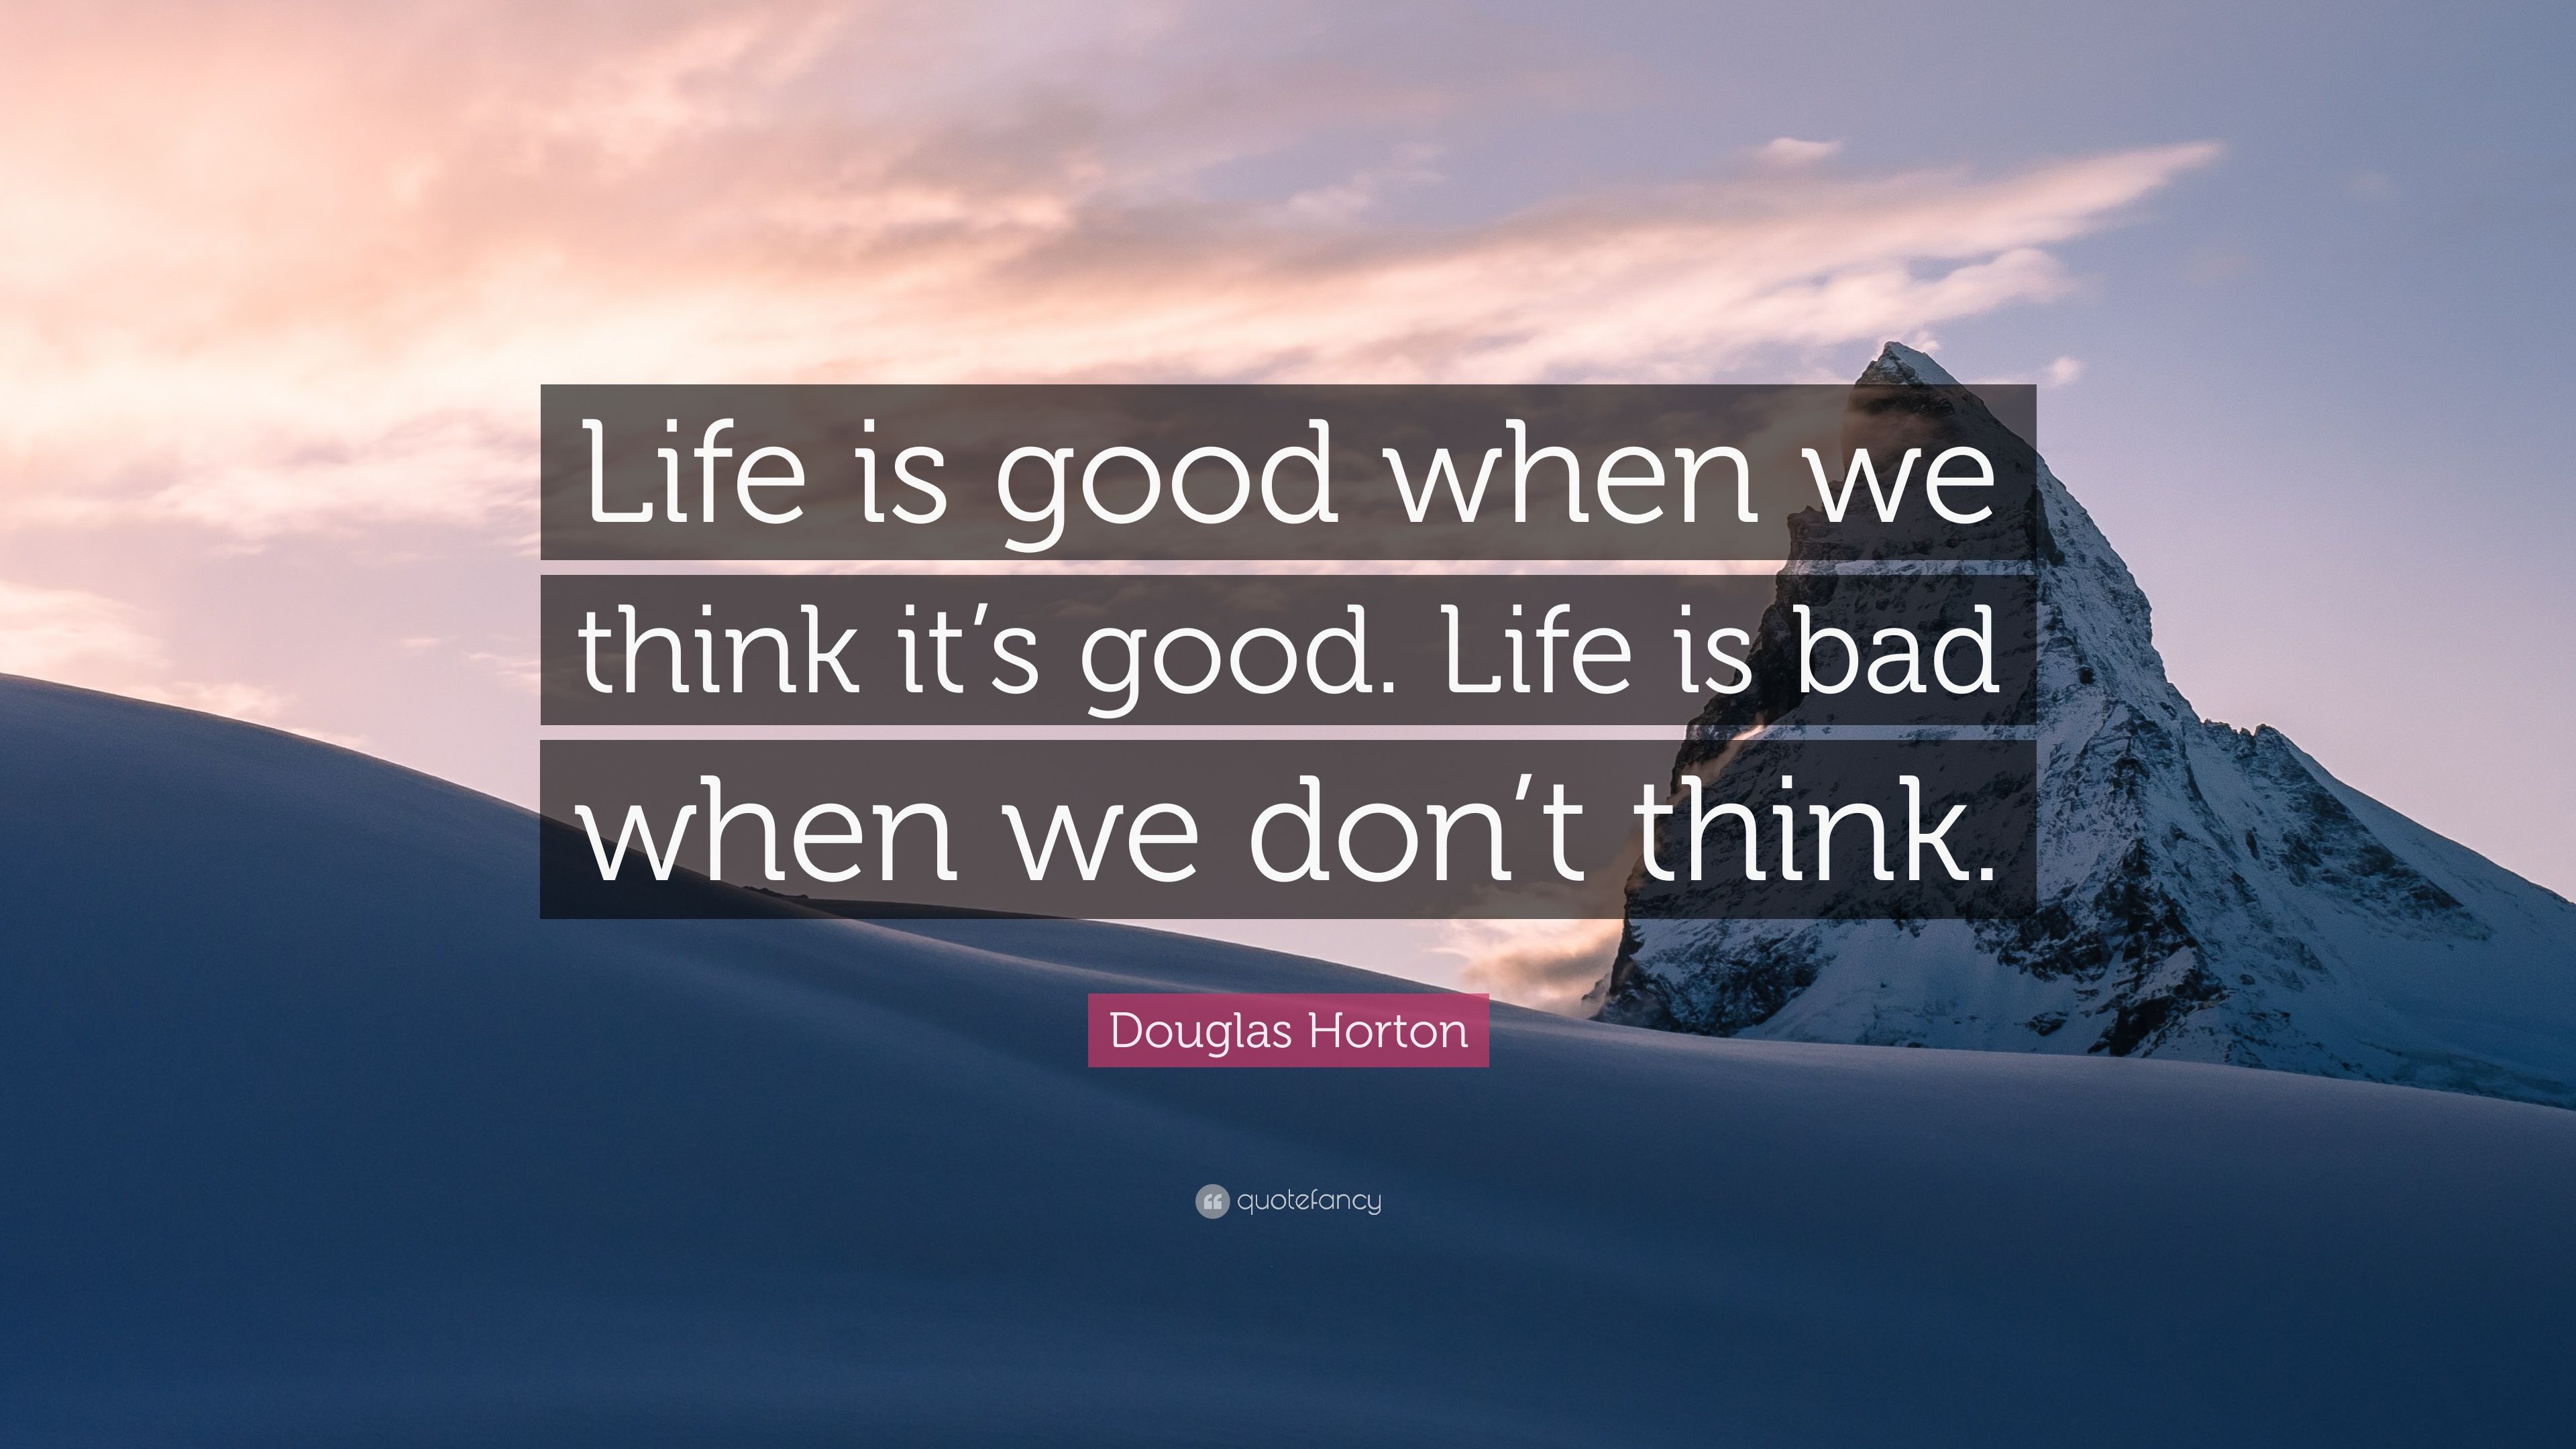 Douglas Horton Quote: “Life is good when we think it's good. Life is bad when we don't think.” (7 wallpaper)